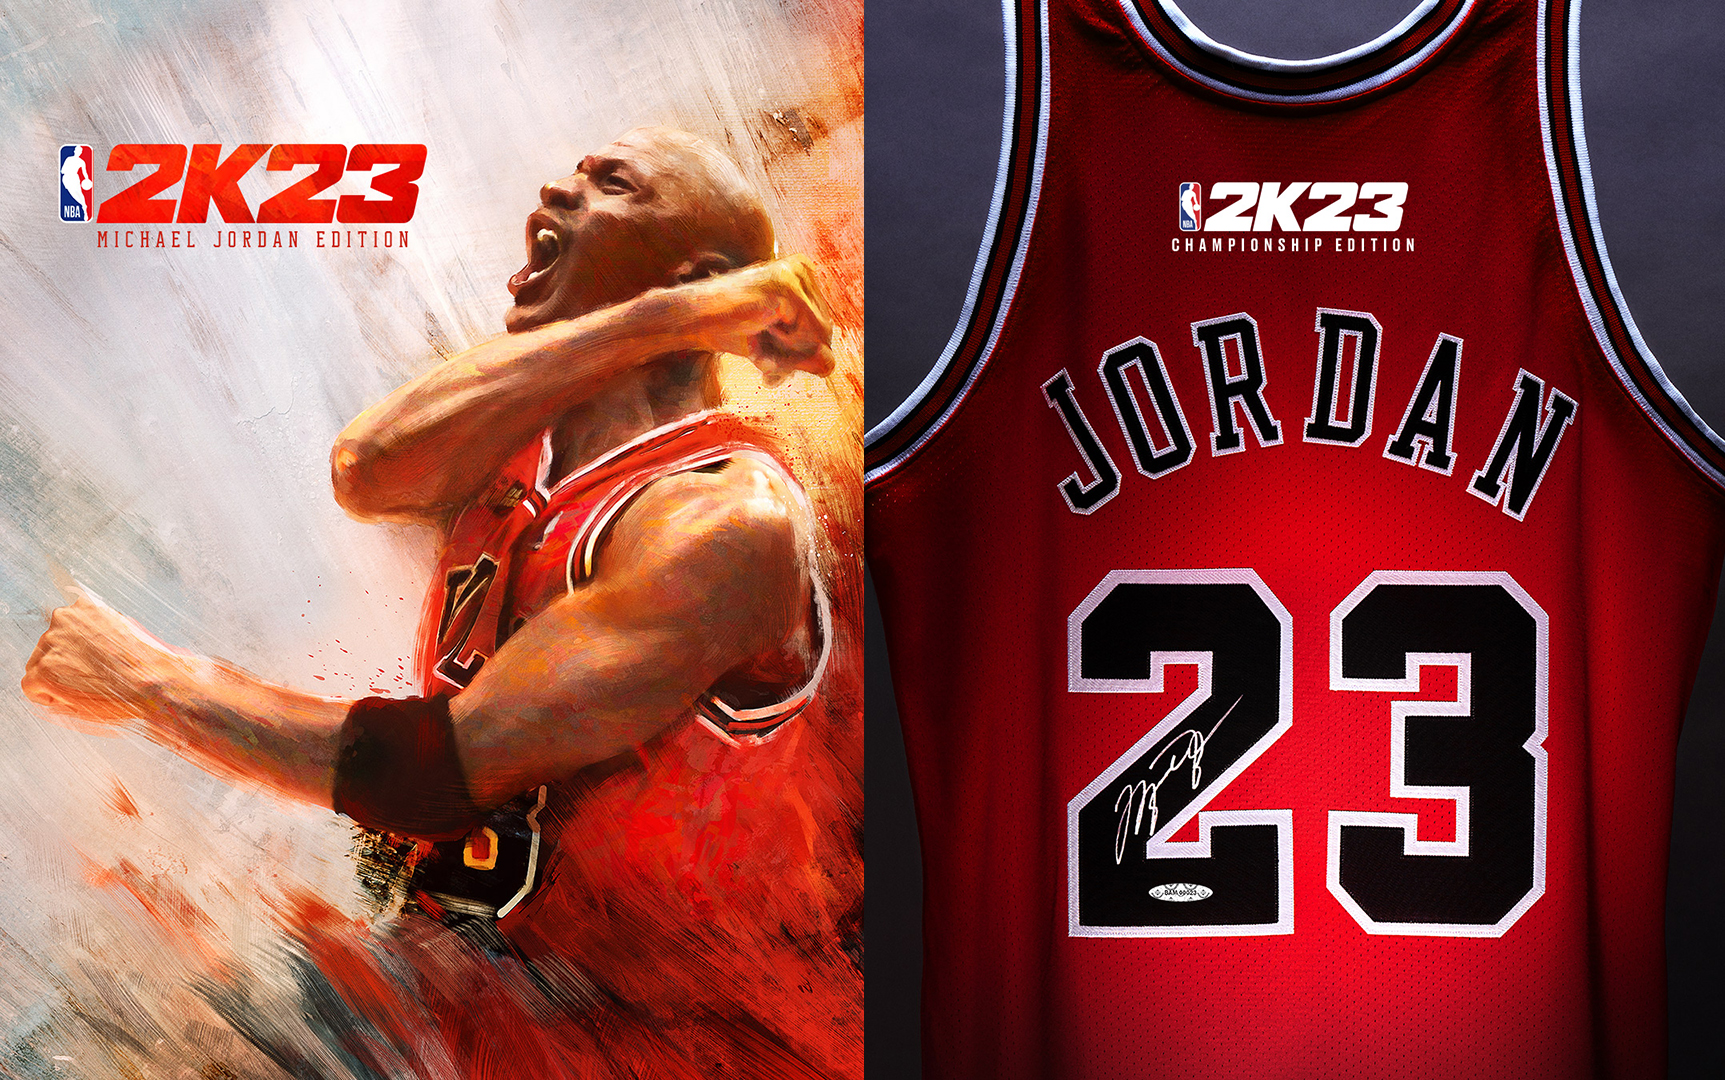 NBA 2K23 reveals Michael Jordan and Champion Edition covers